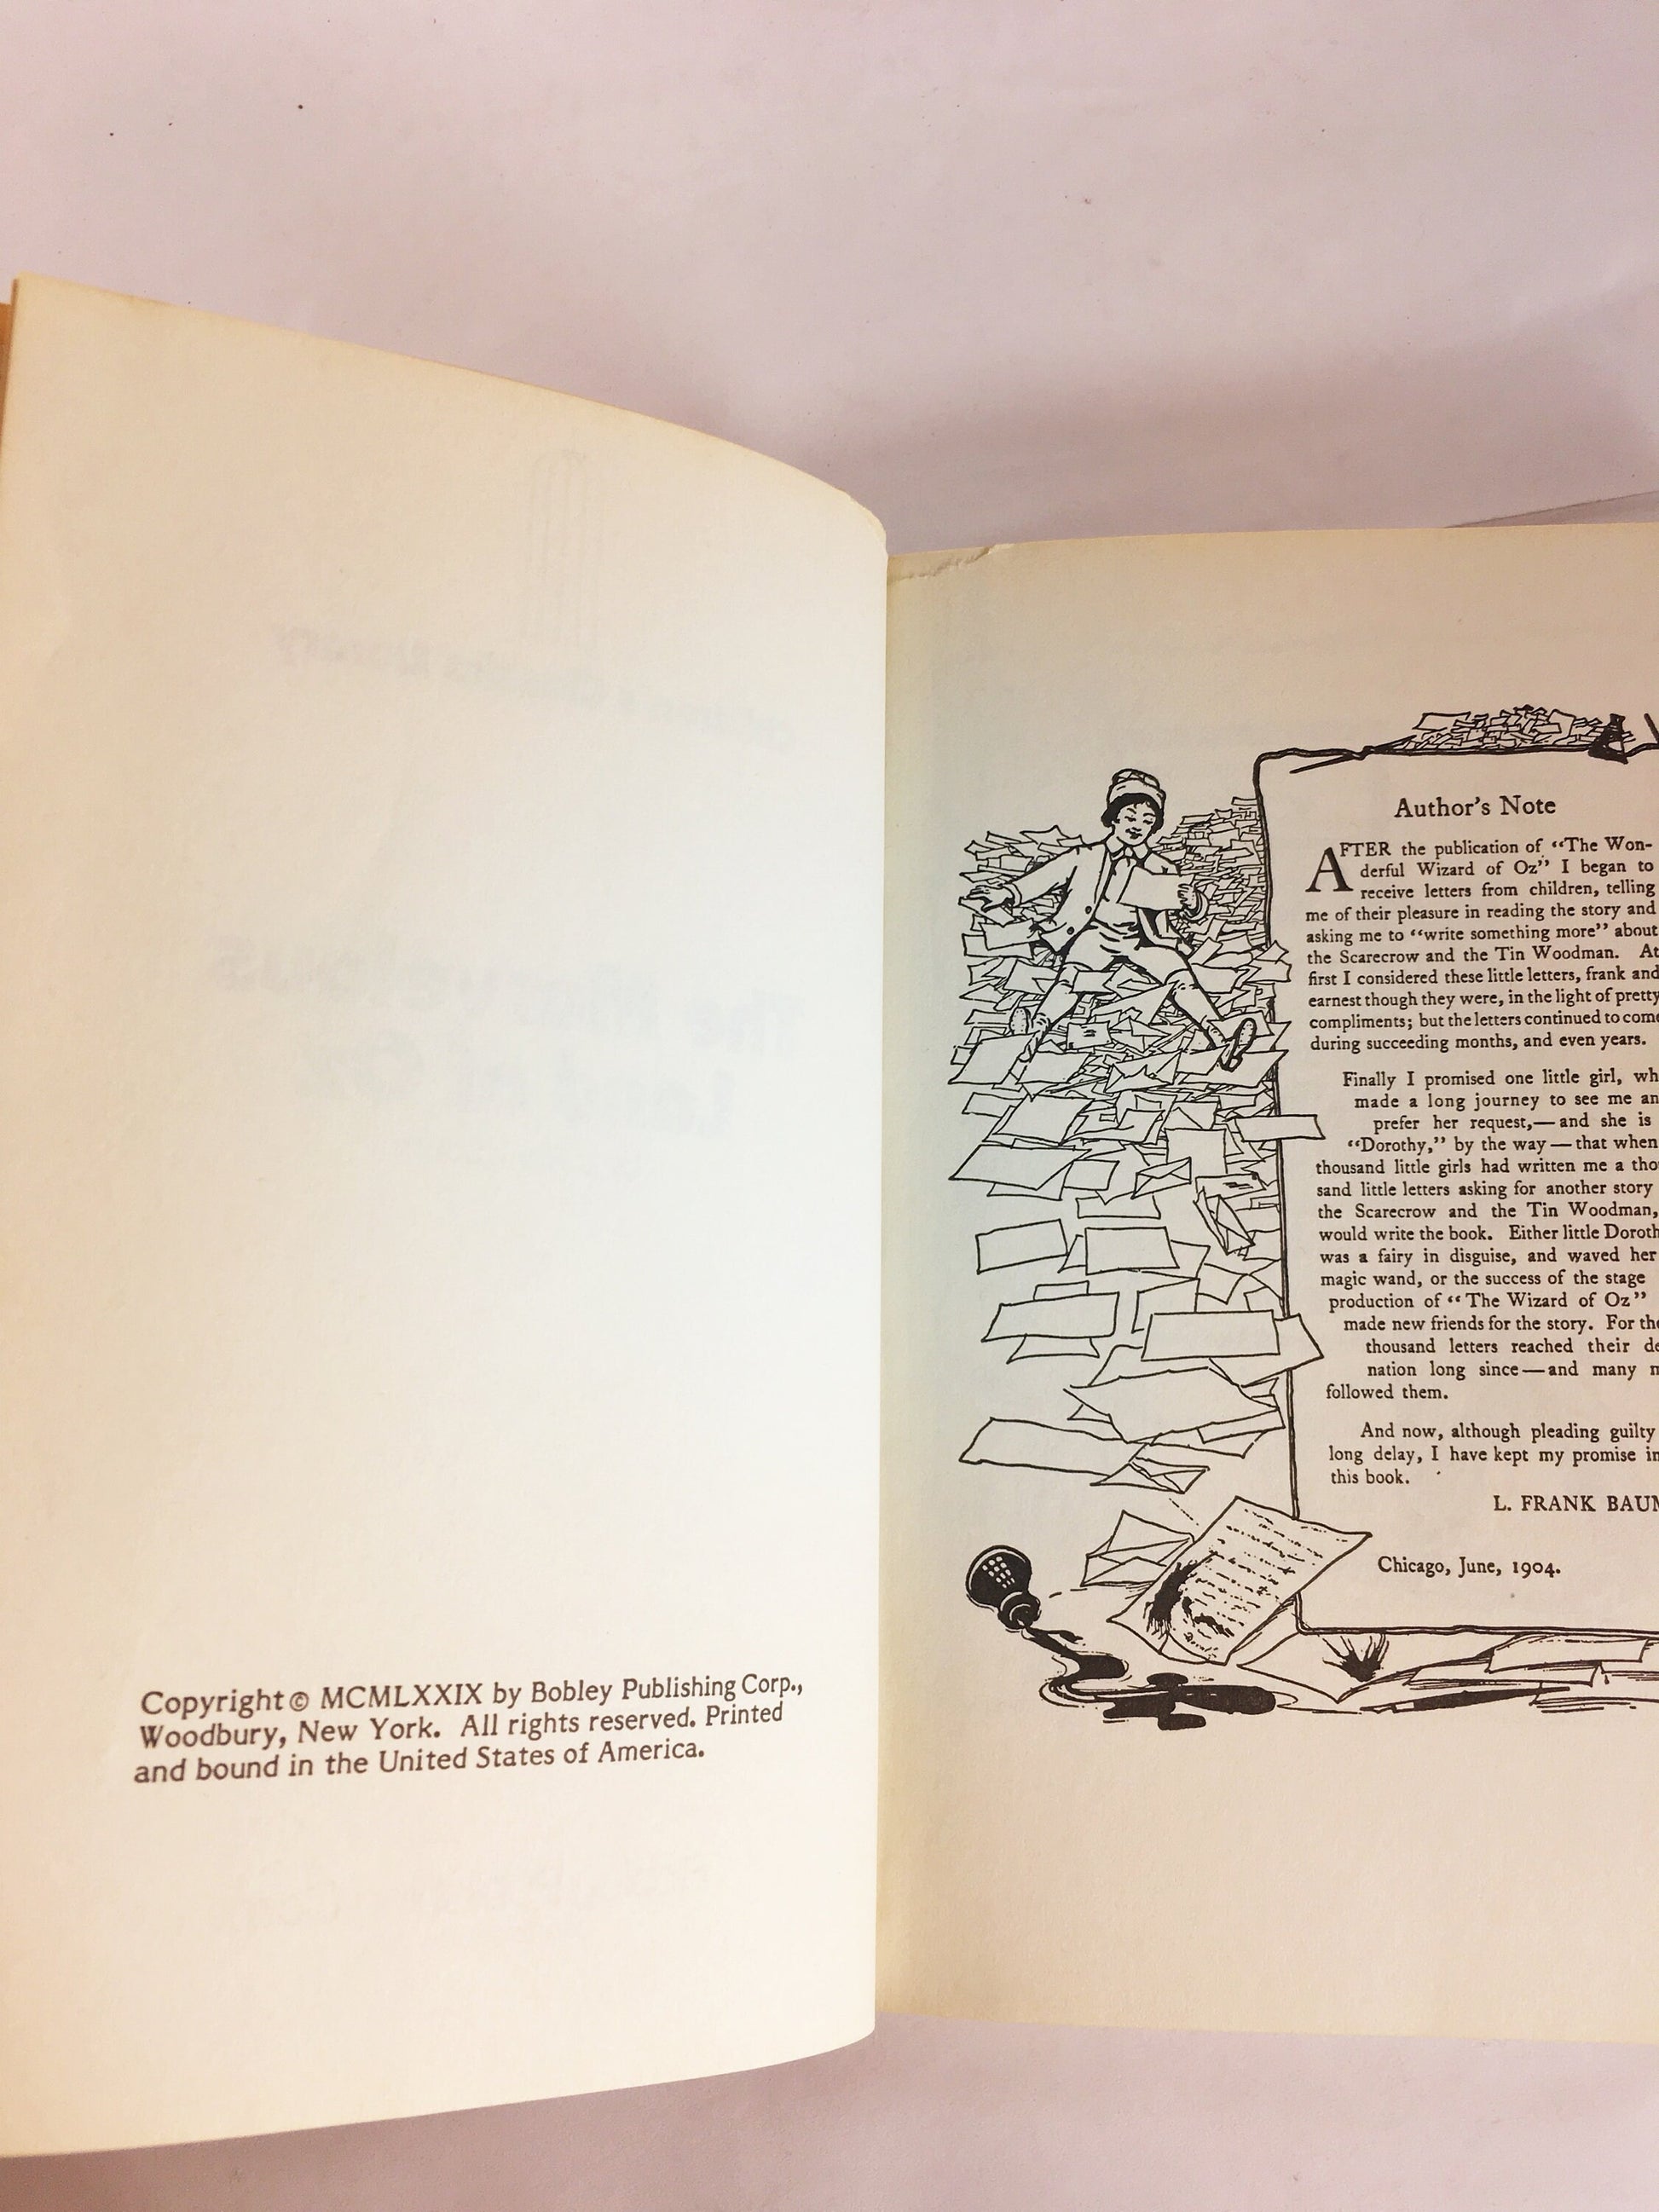 Children's Classics Library set 13 vintage books circa 1979. Home nursery decor gift Land of Oz, Fairy Tales Christmas Carol Just So Stories